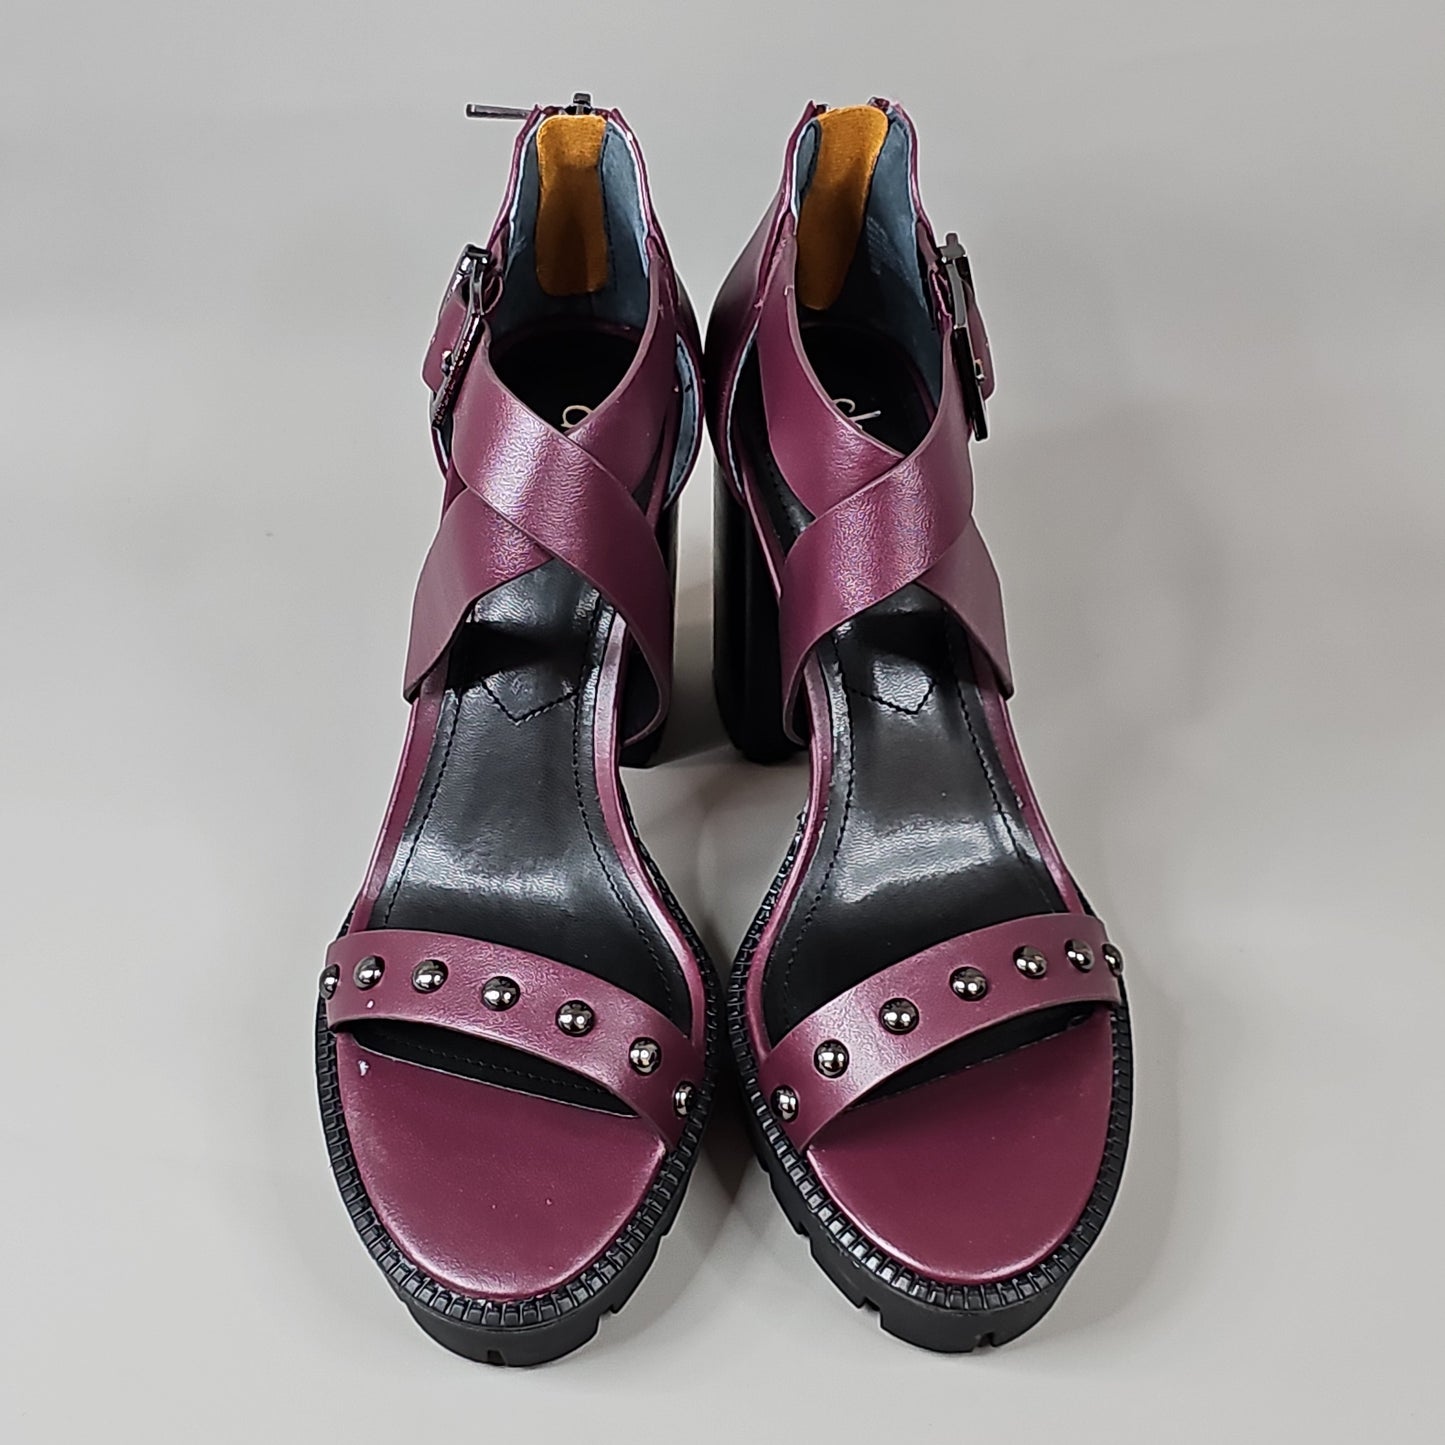 CHARLES BY CHARLES DAVID Women's Vanden Studded Sandal Shoe Sz 8.5M Burgundy (New)